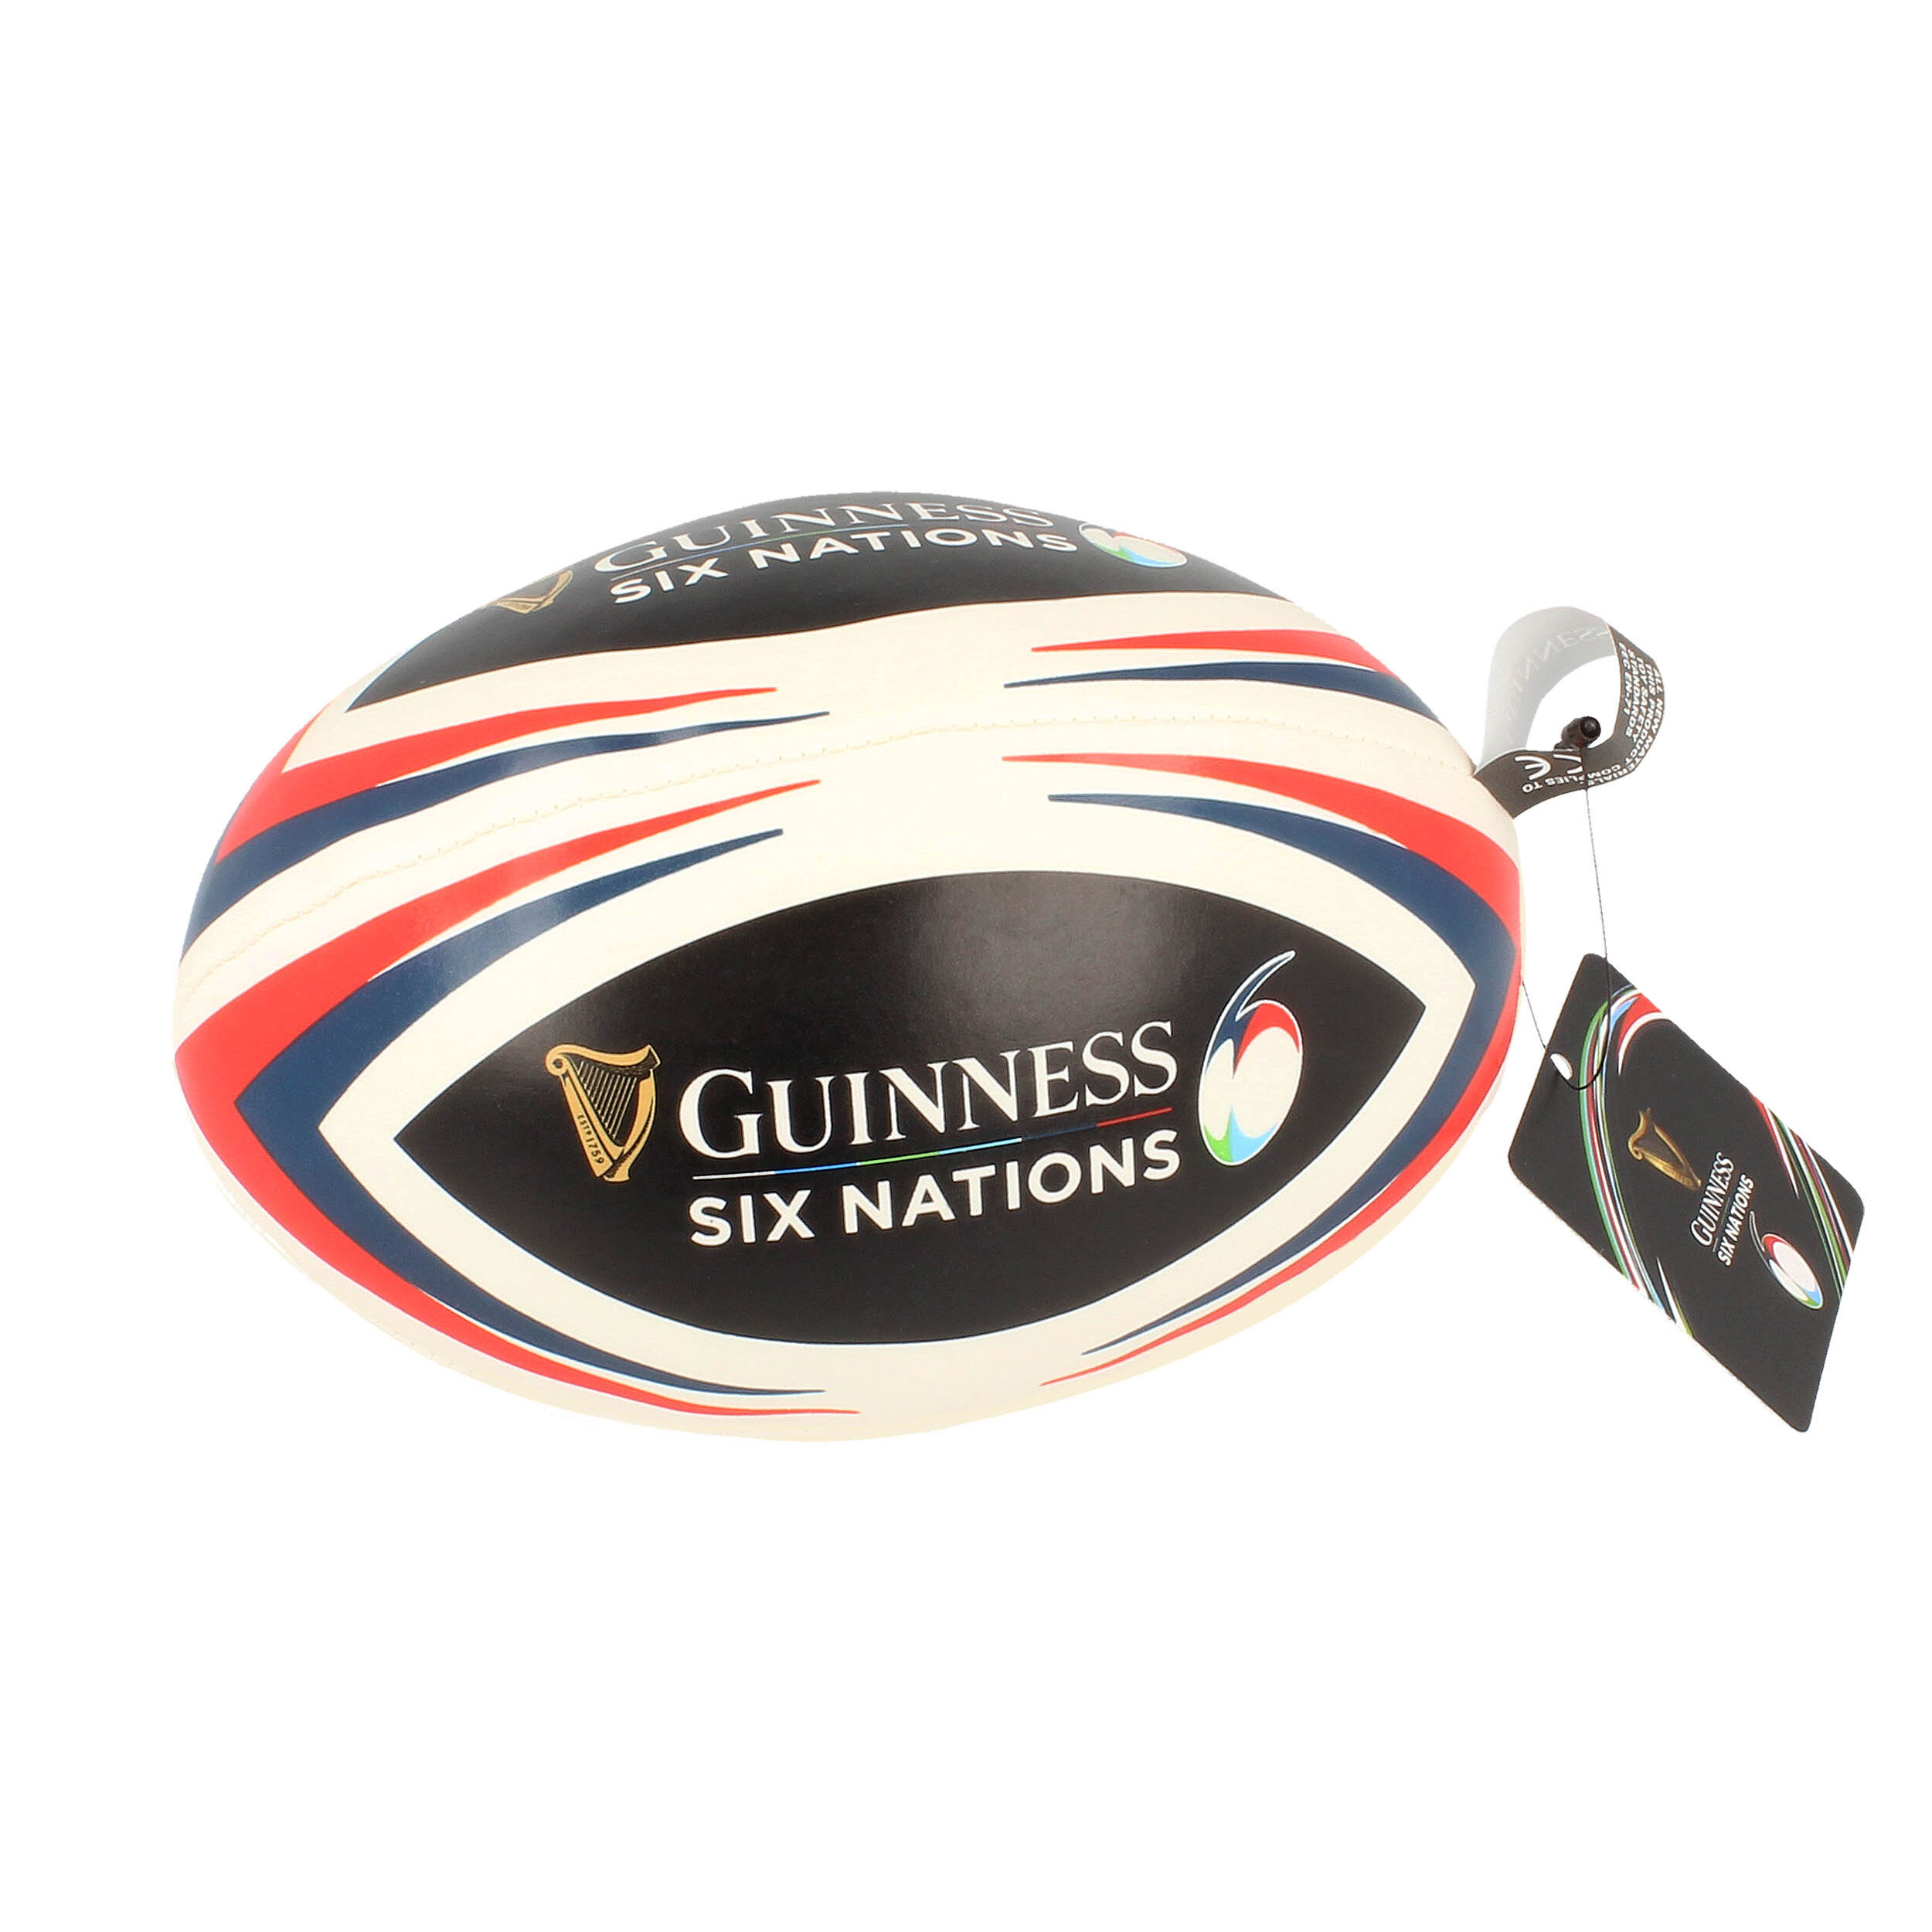 Patrick six nations mini rugby ball 